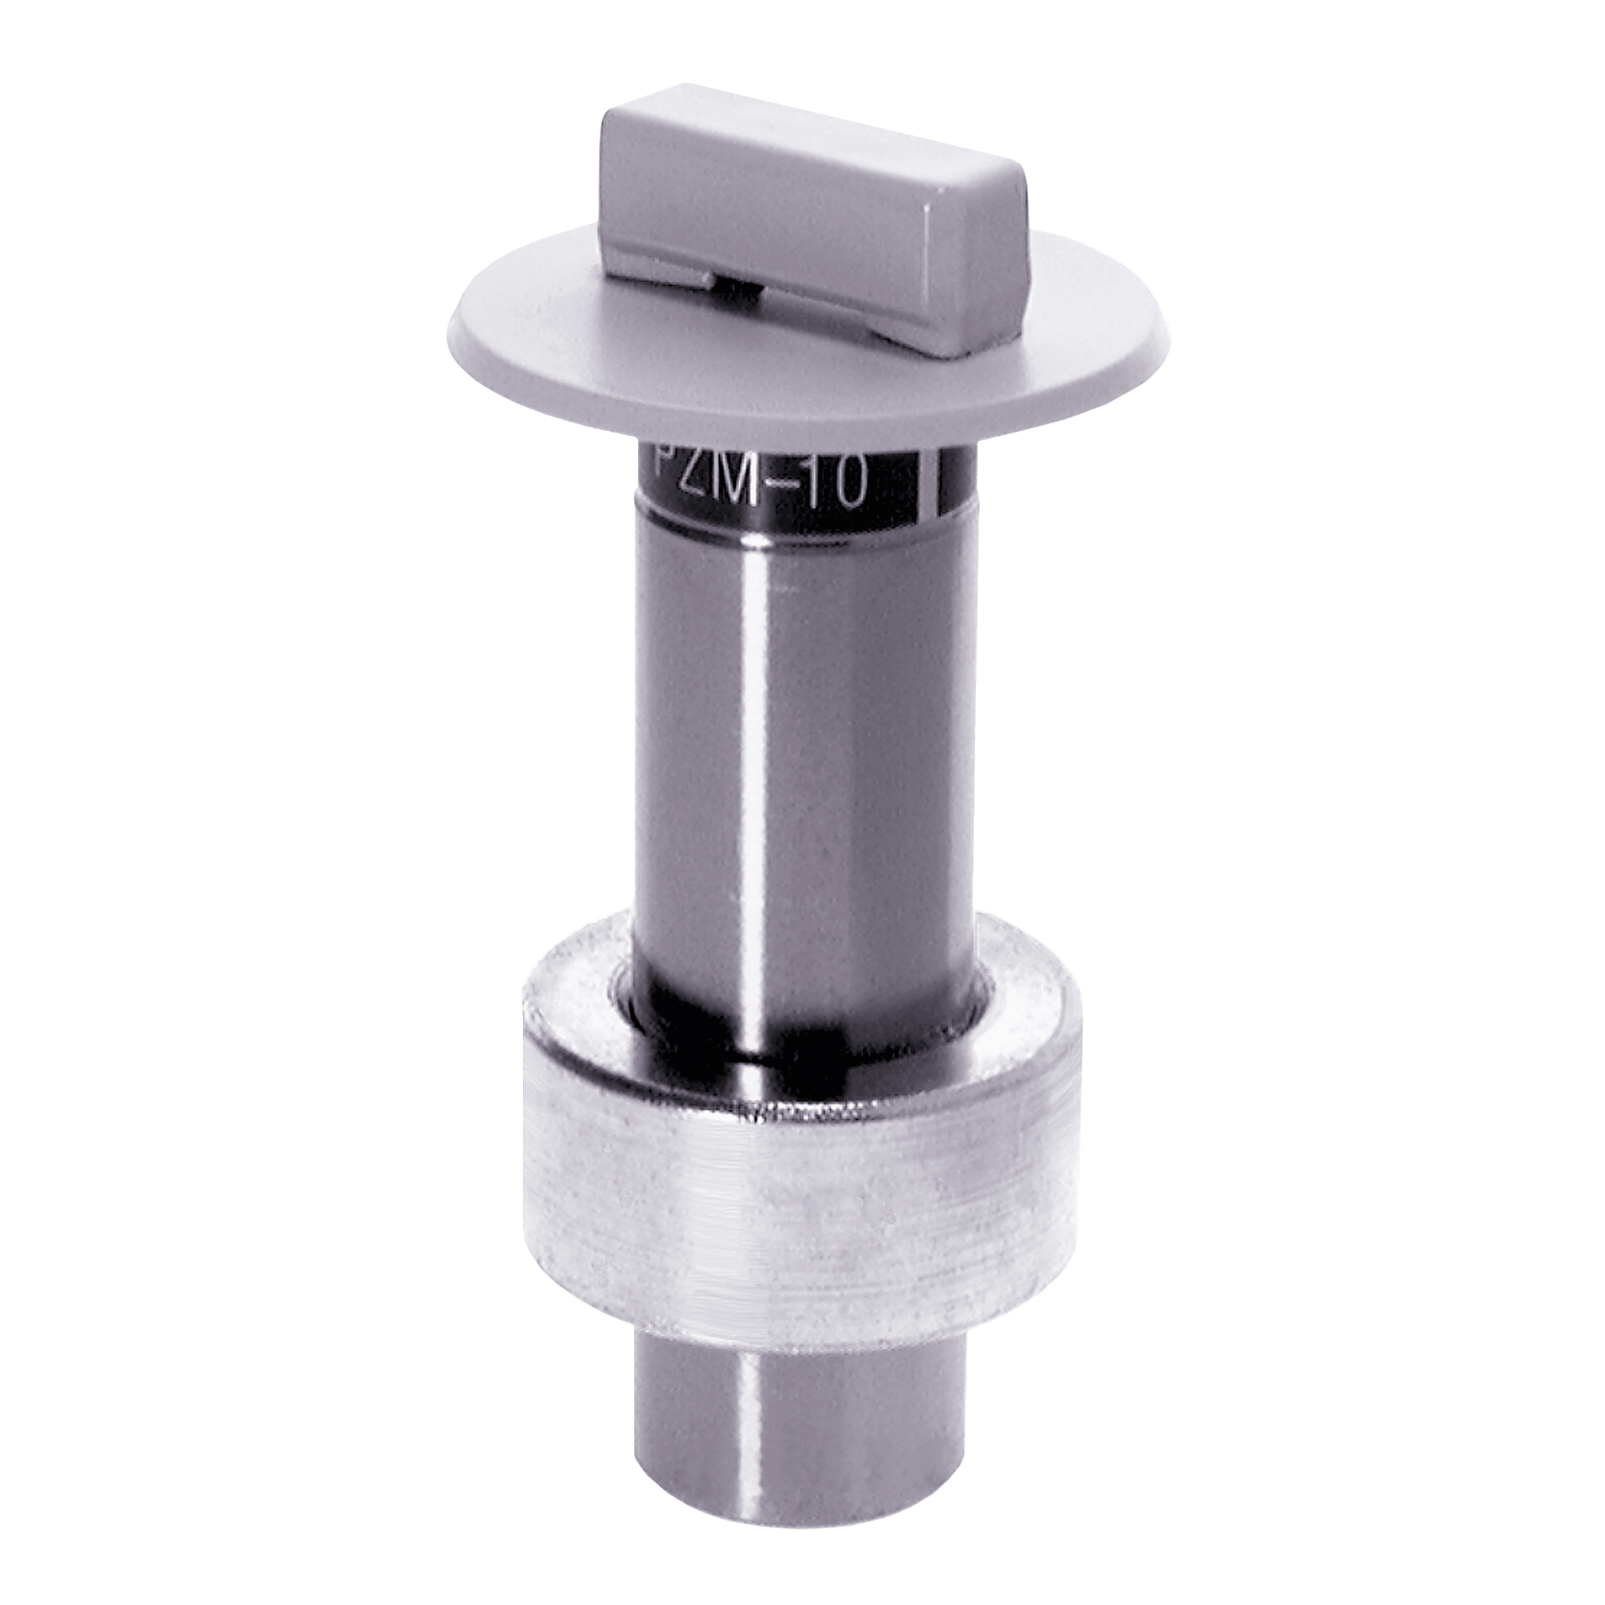 PZM10 (B-Stock) - White - Professional flush-mount boundary layer microphone - Hero